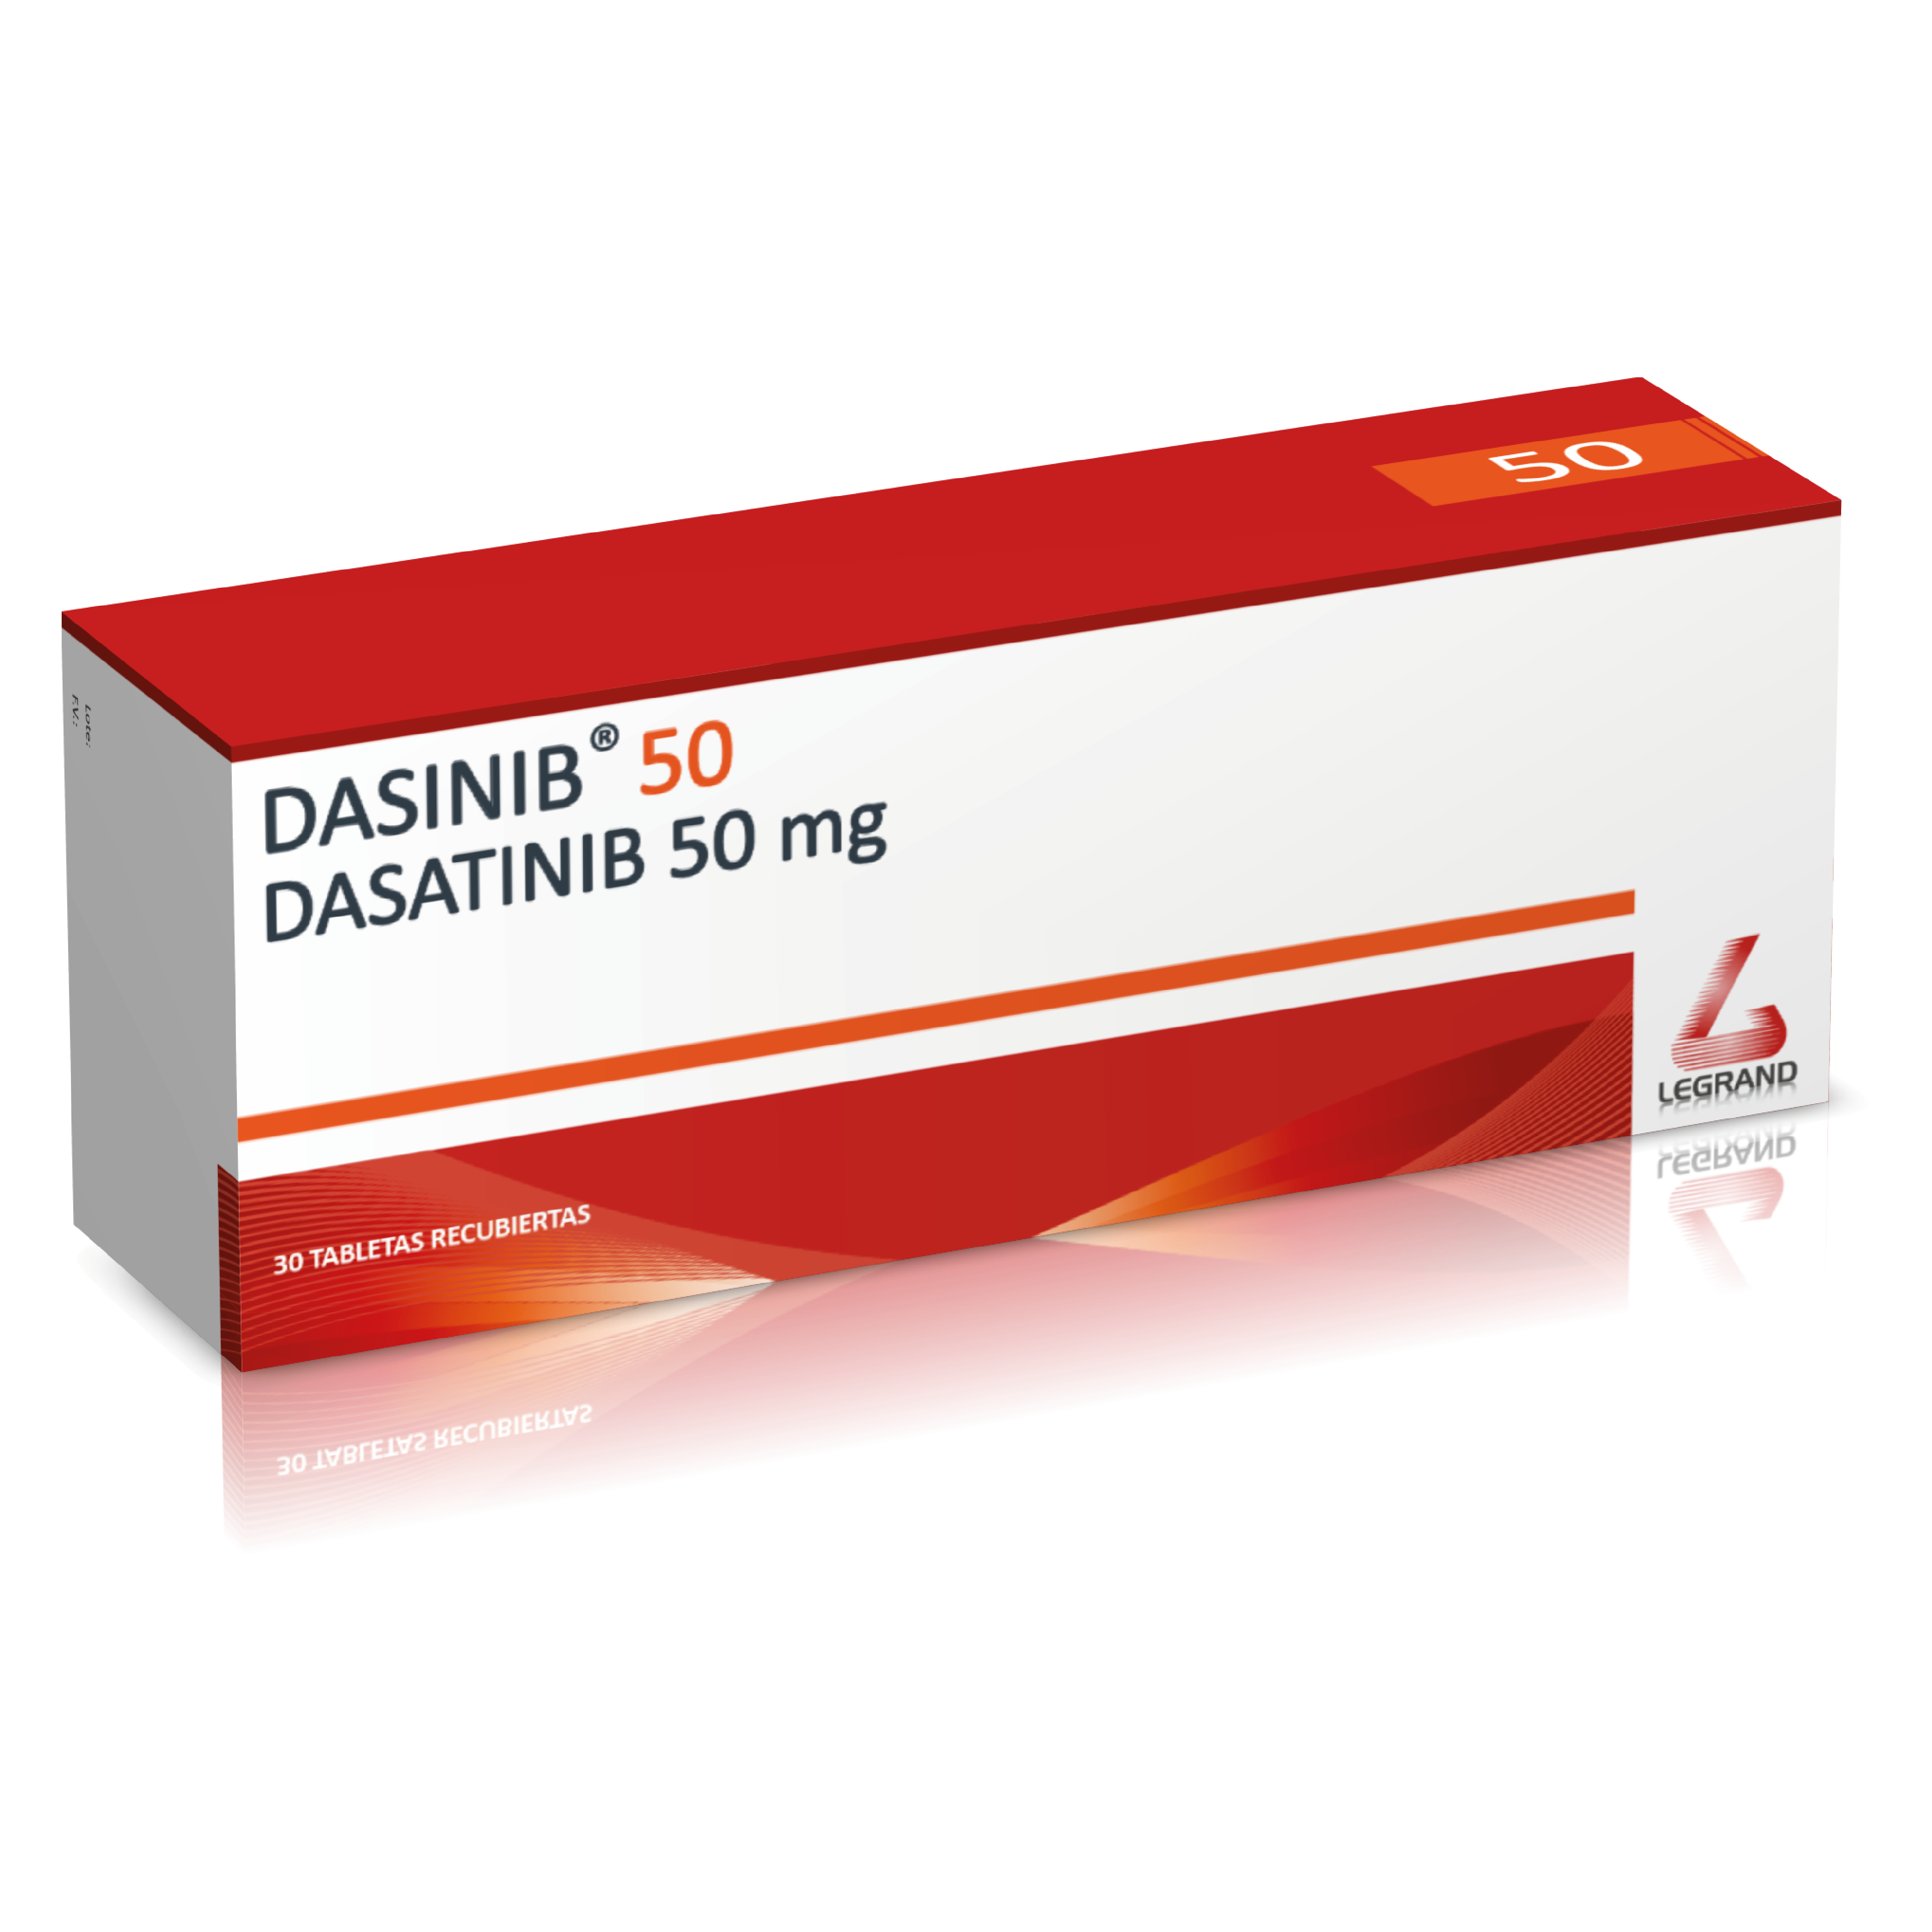 Dasinib® 50